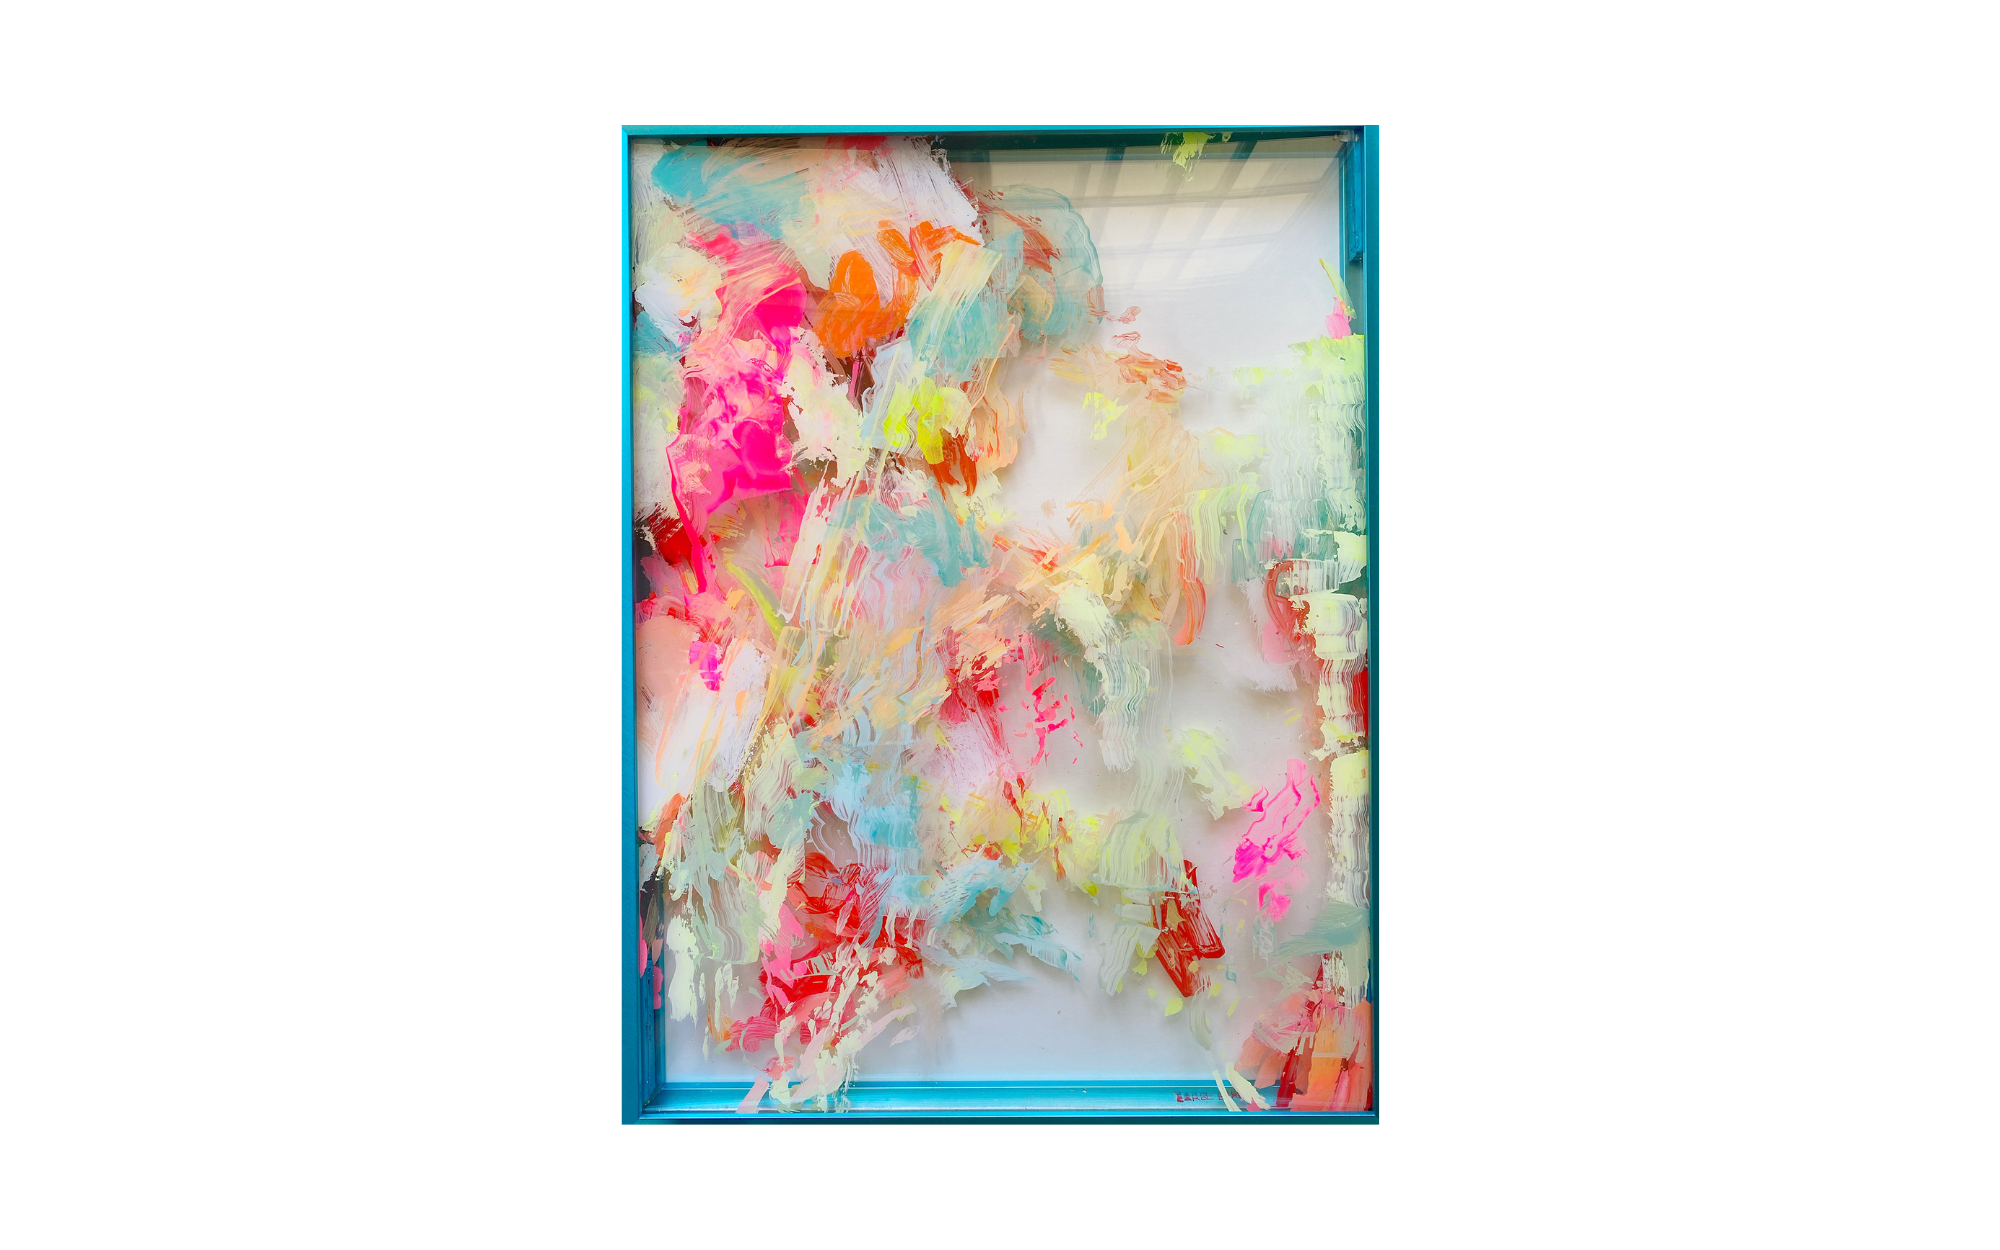  Carol Barber,  Dancing Shadows  (2022) 18 x 24”, acrylic on acrylic sheets, $900 